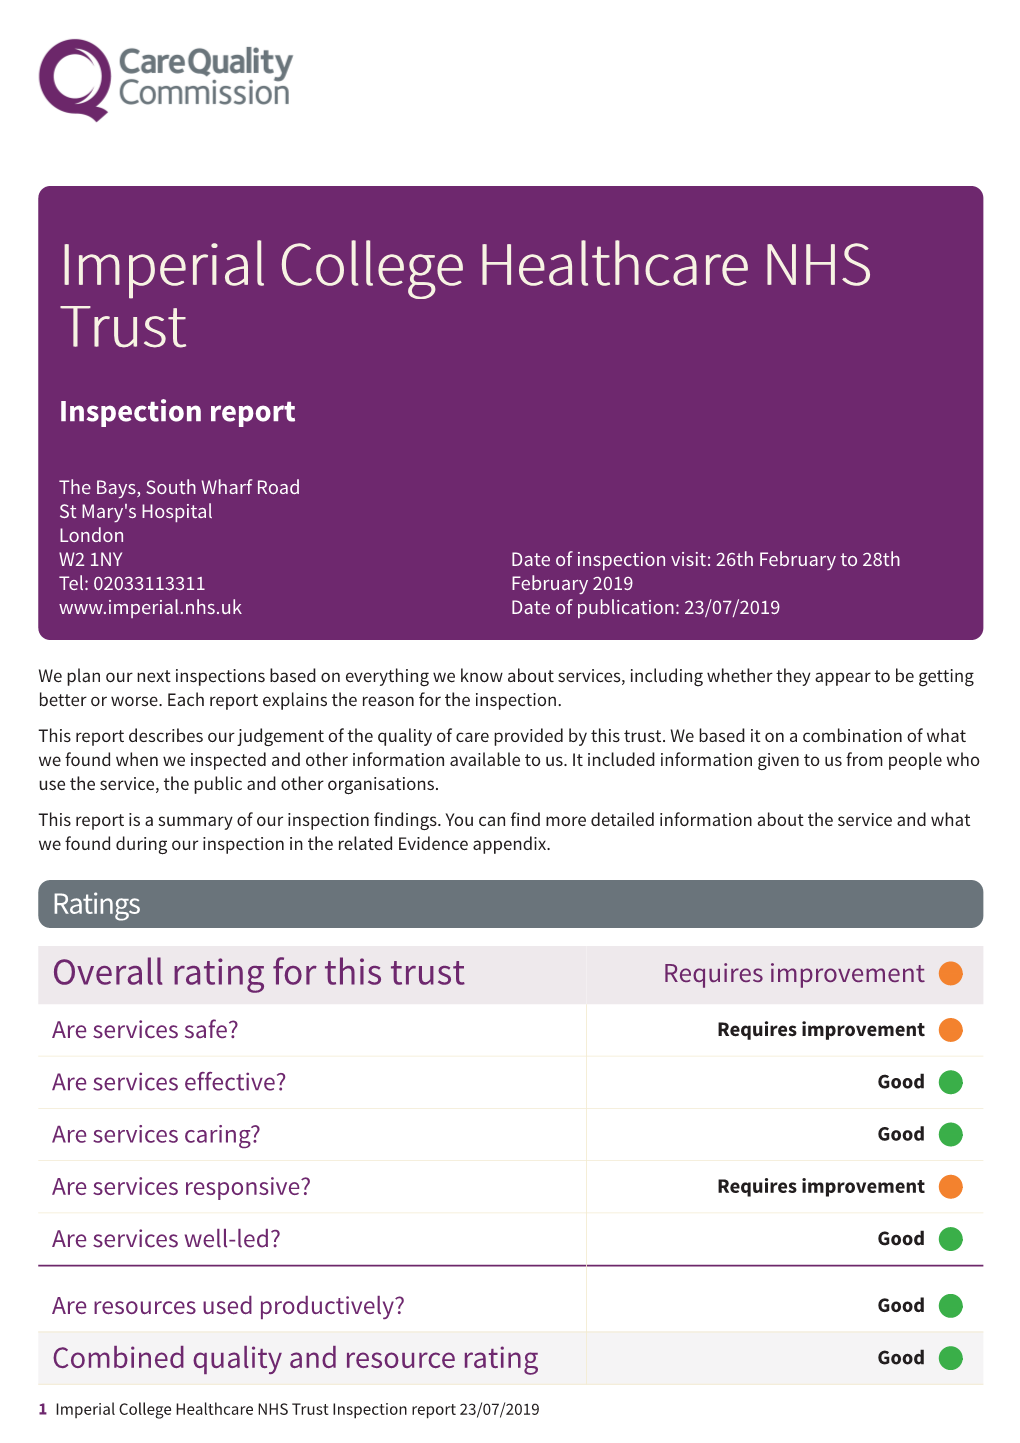 RYJ Imperial College Healthcare NHS Trust (26/02/2019)